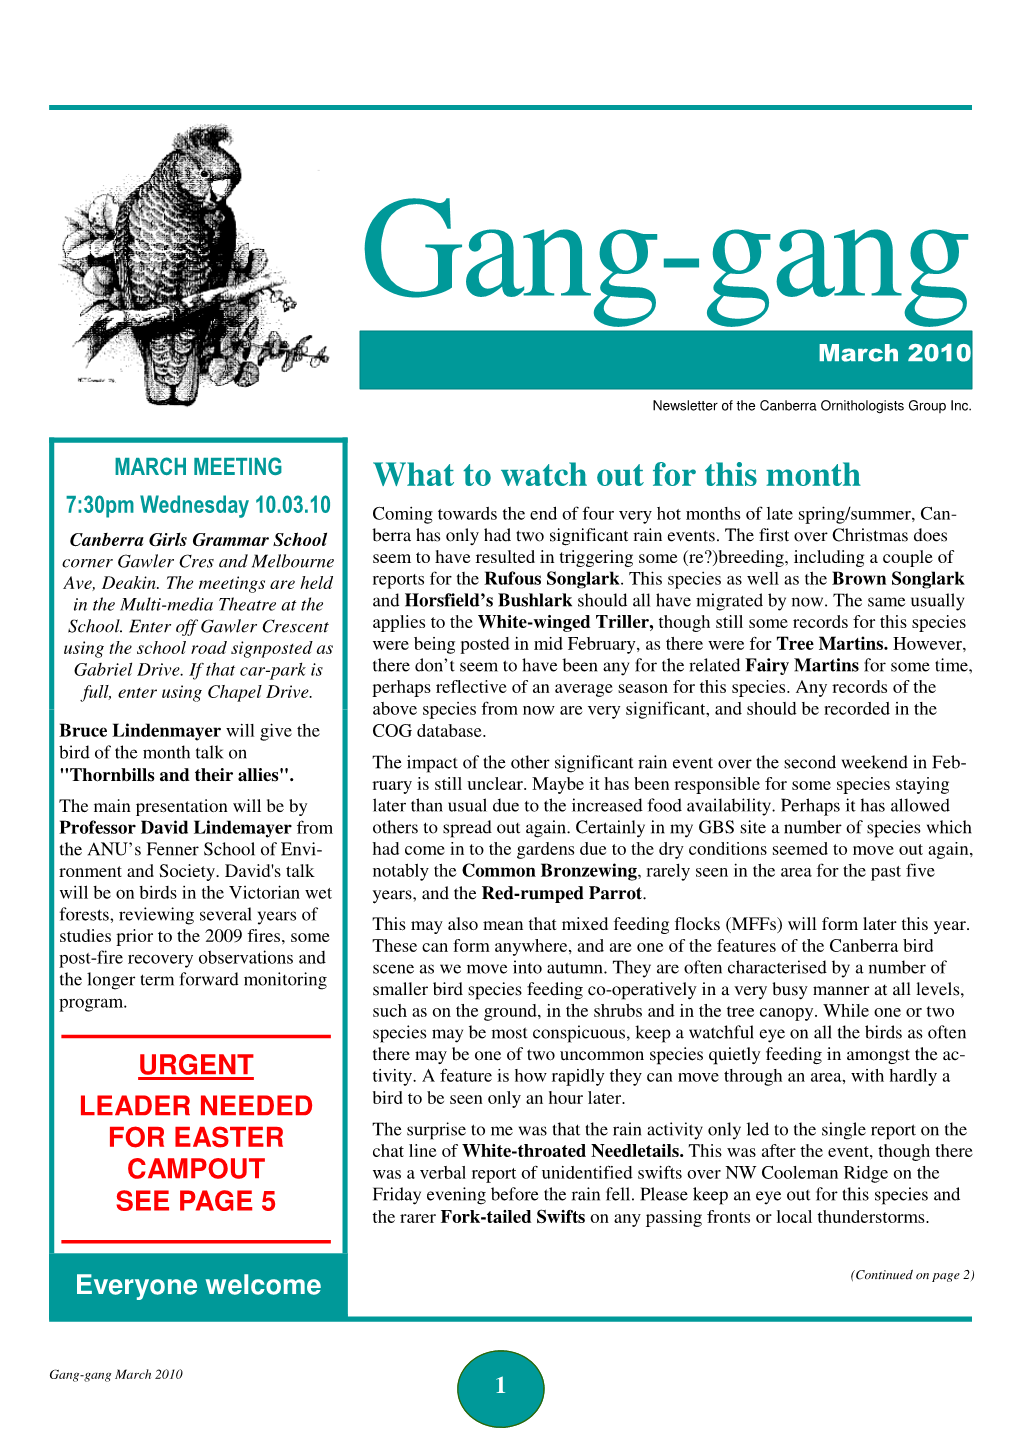 Gang-Gang March 2010